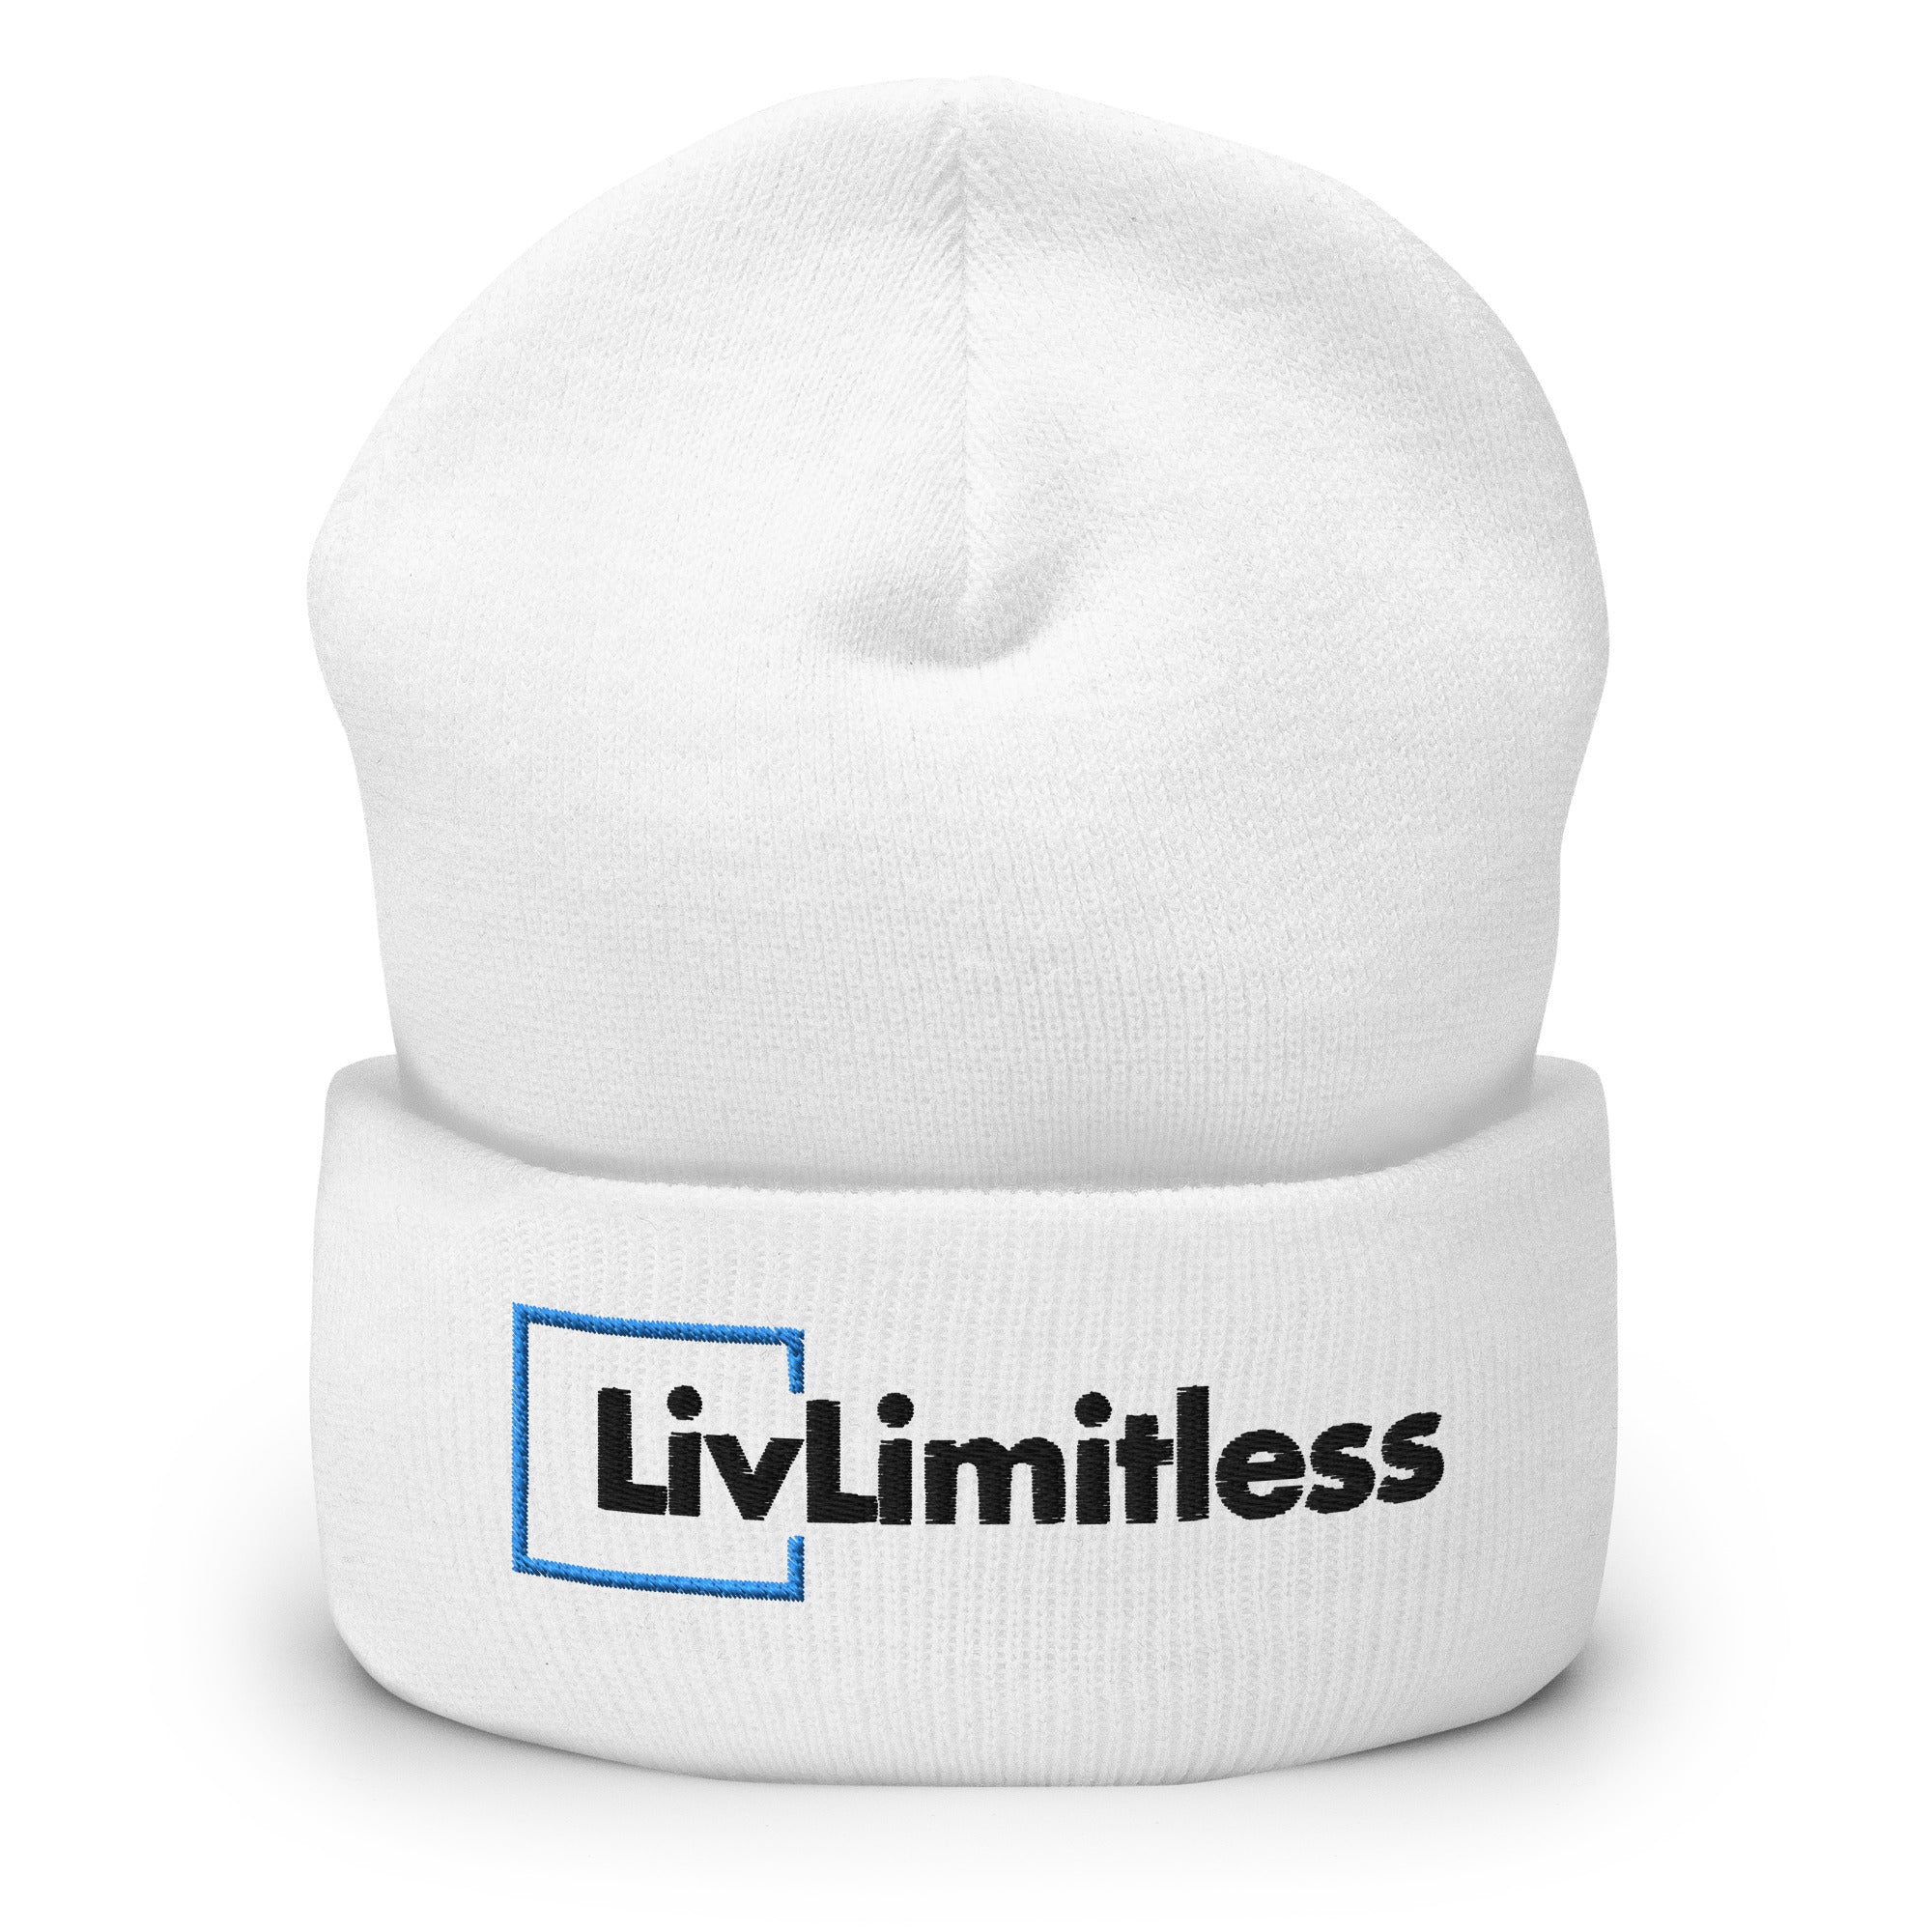 LivLimitless White Cuffed Beanie